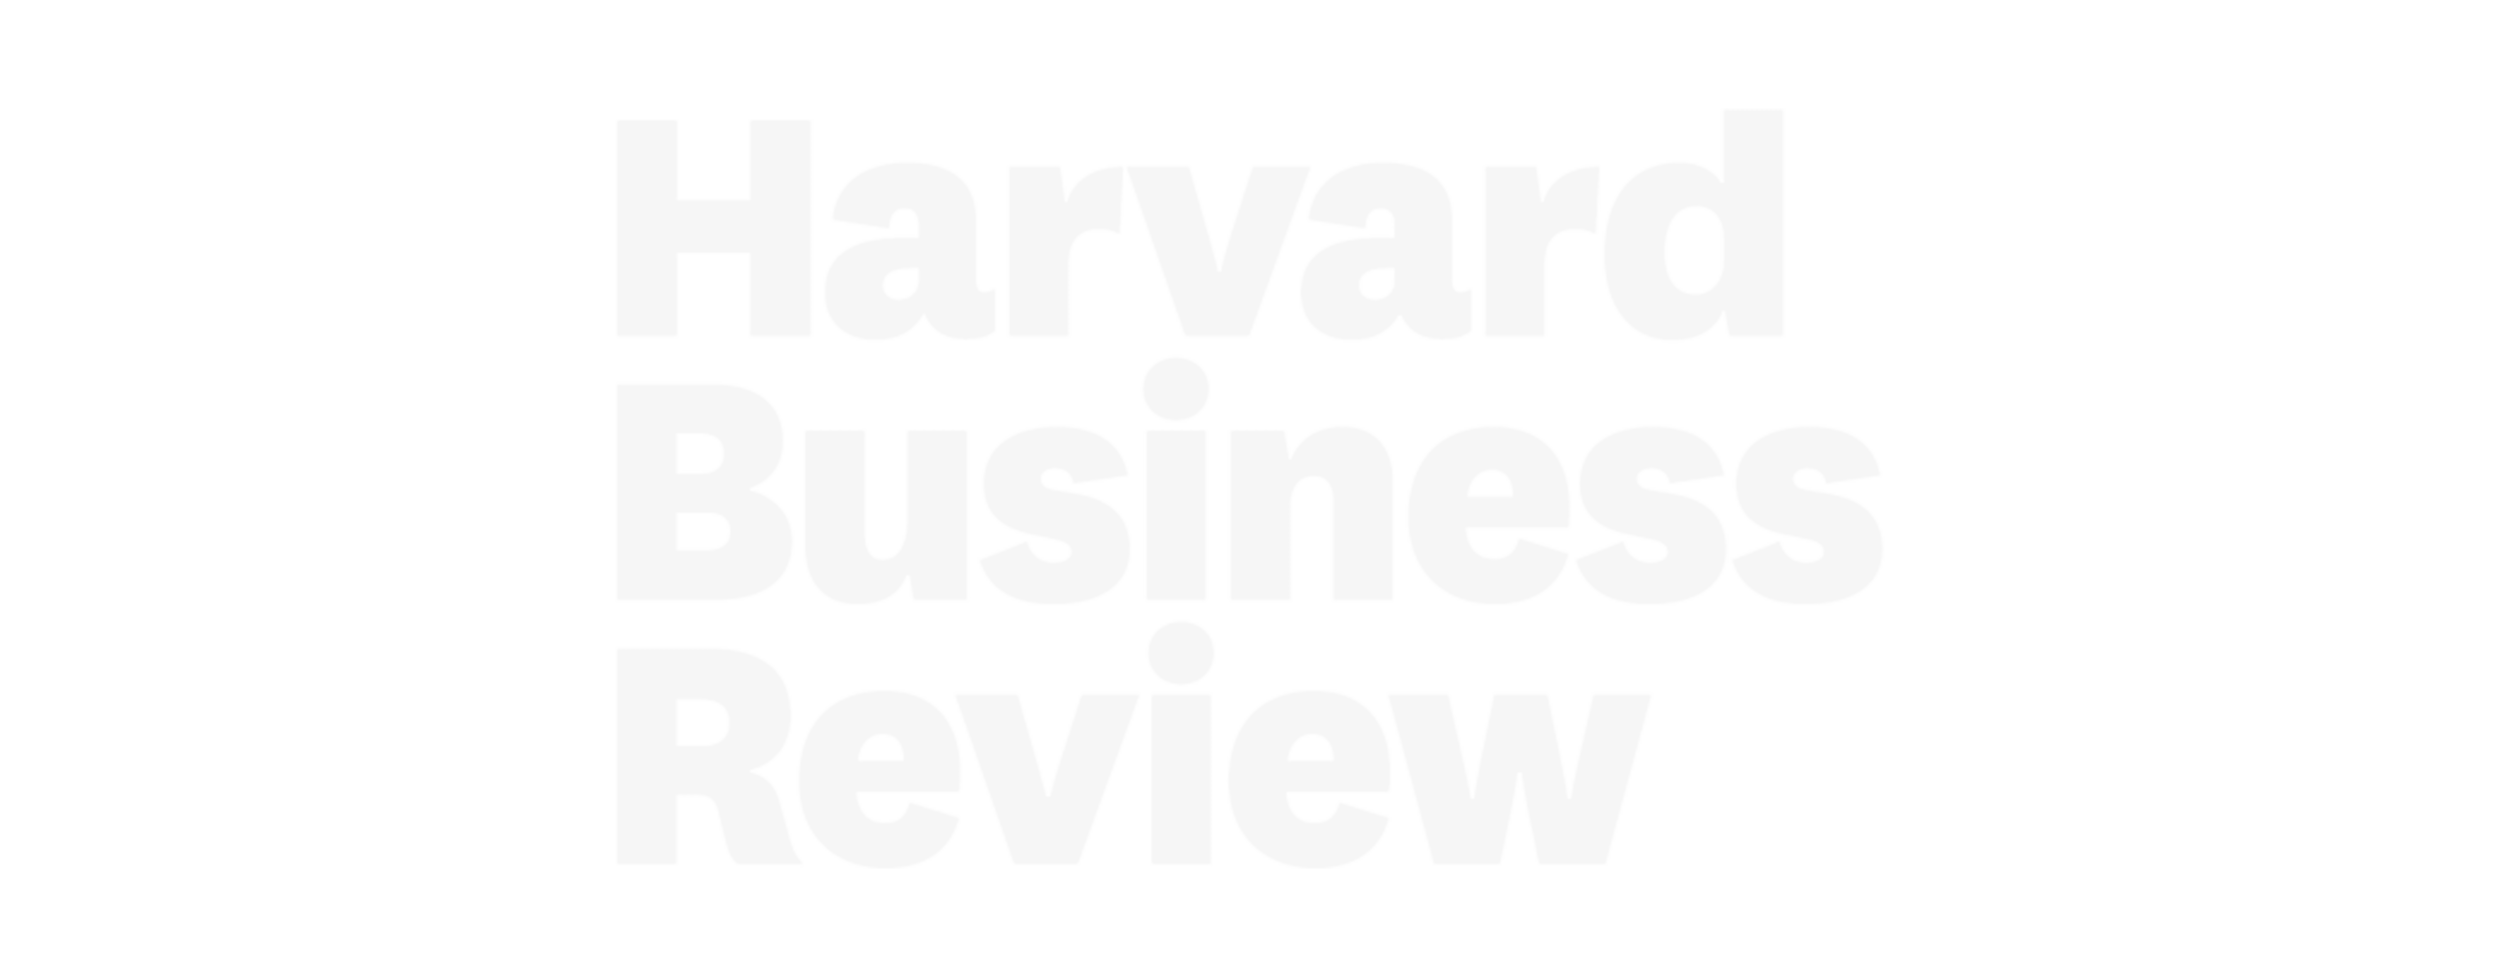 harvard-business-review.png